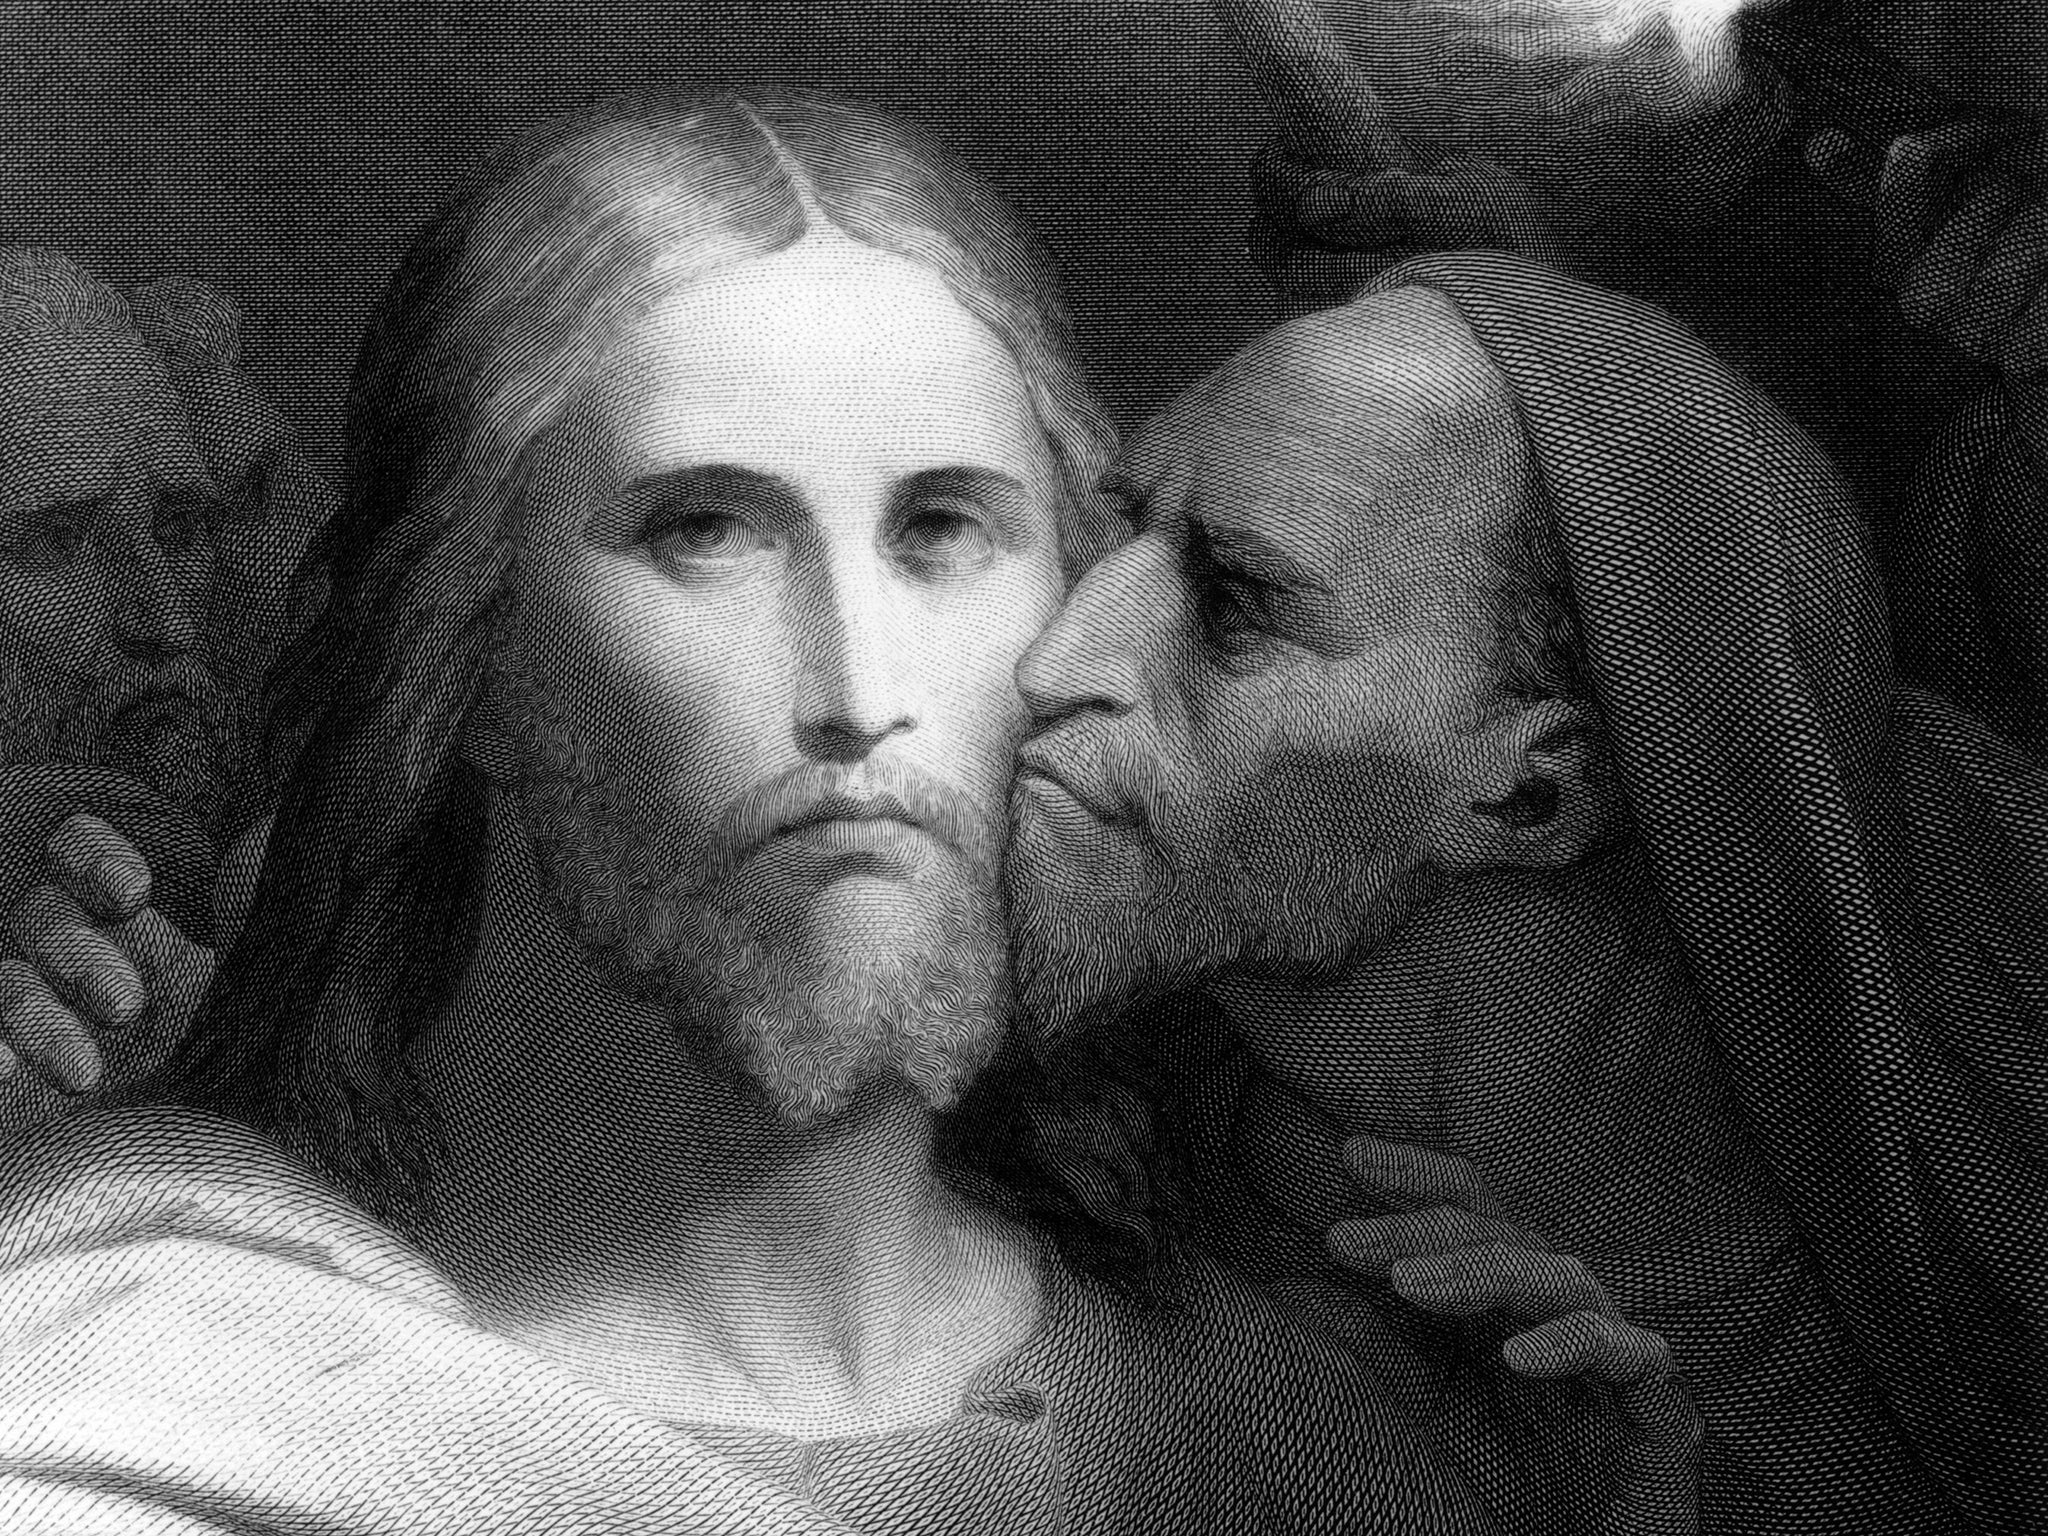 Judas seen kissing Jesus, betraying him to soldiers